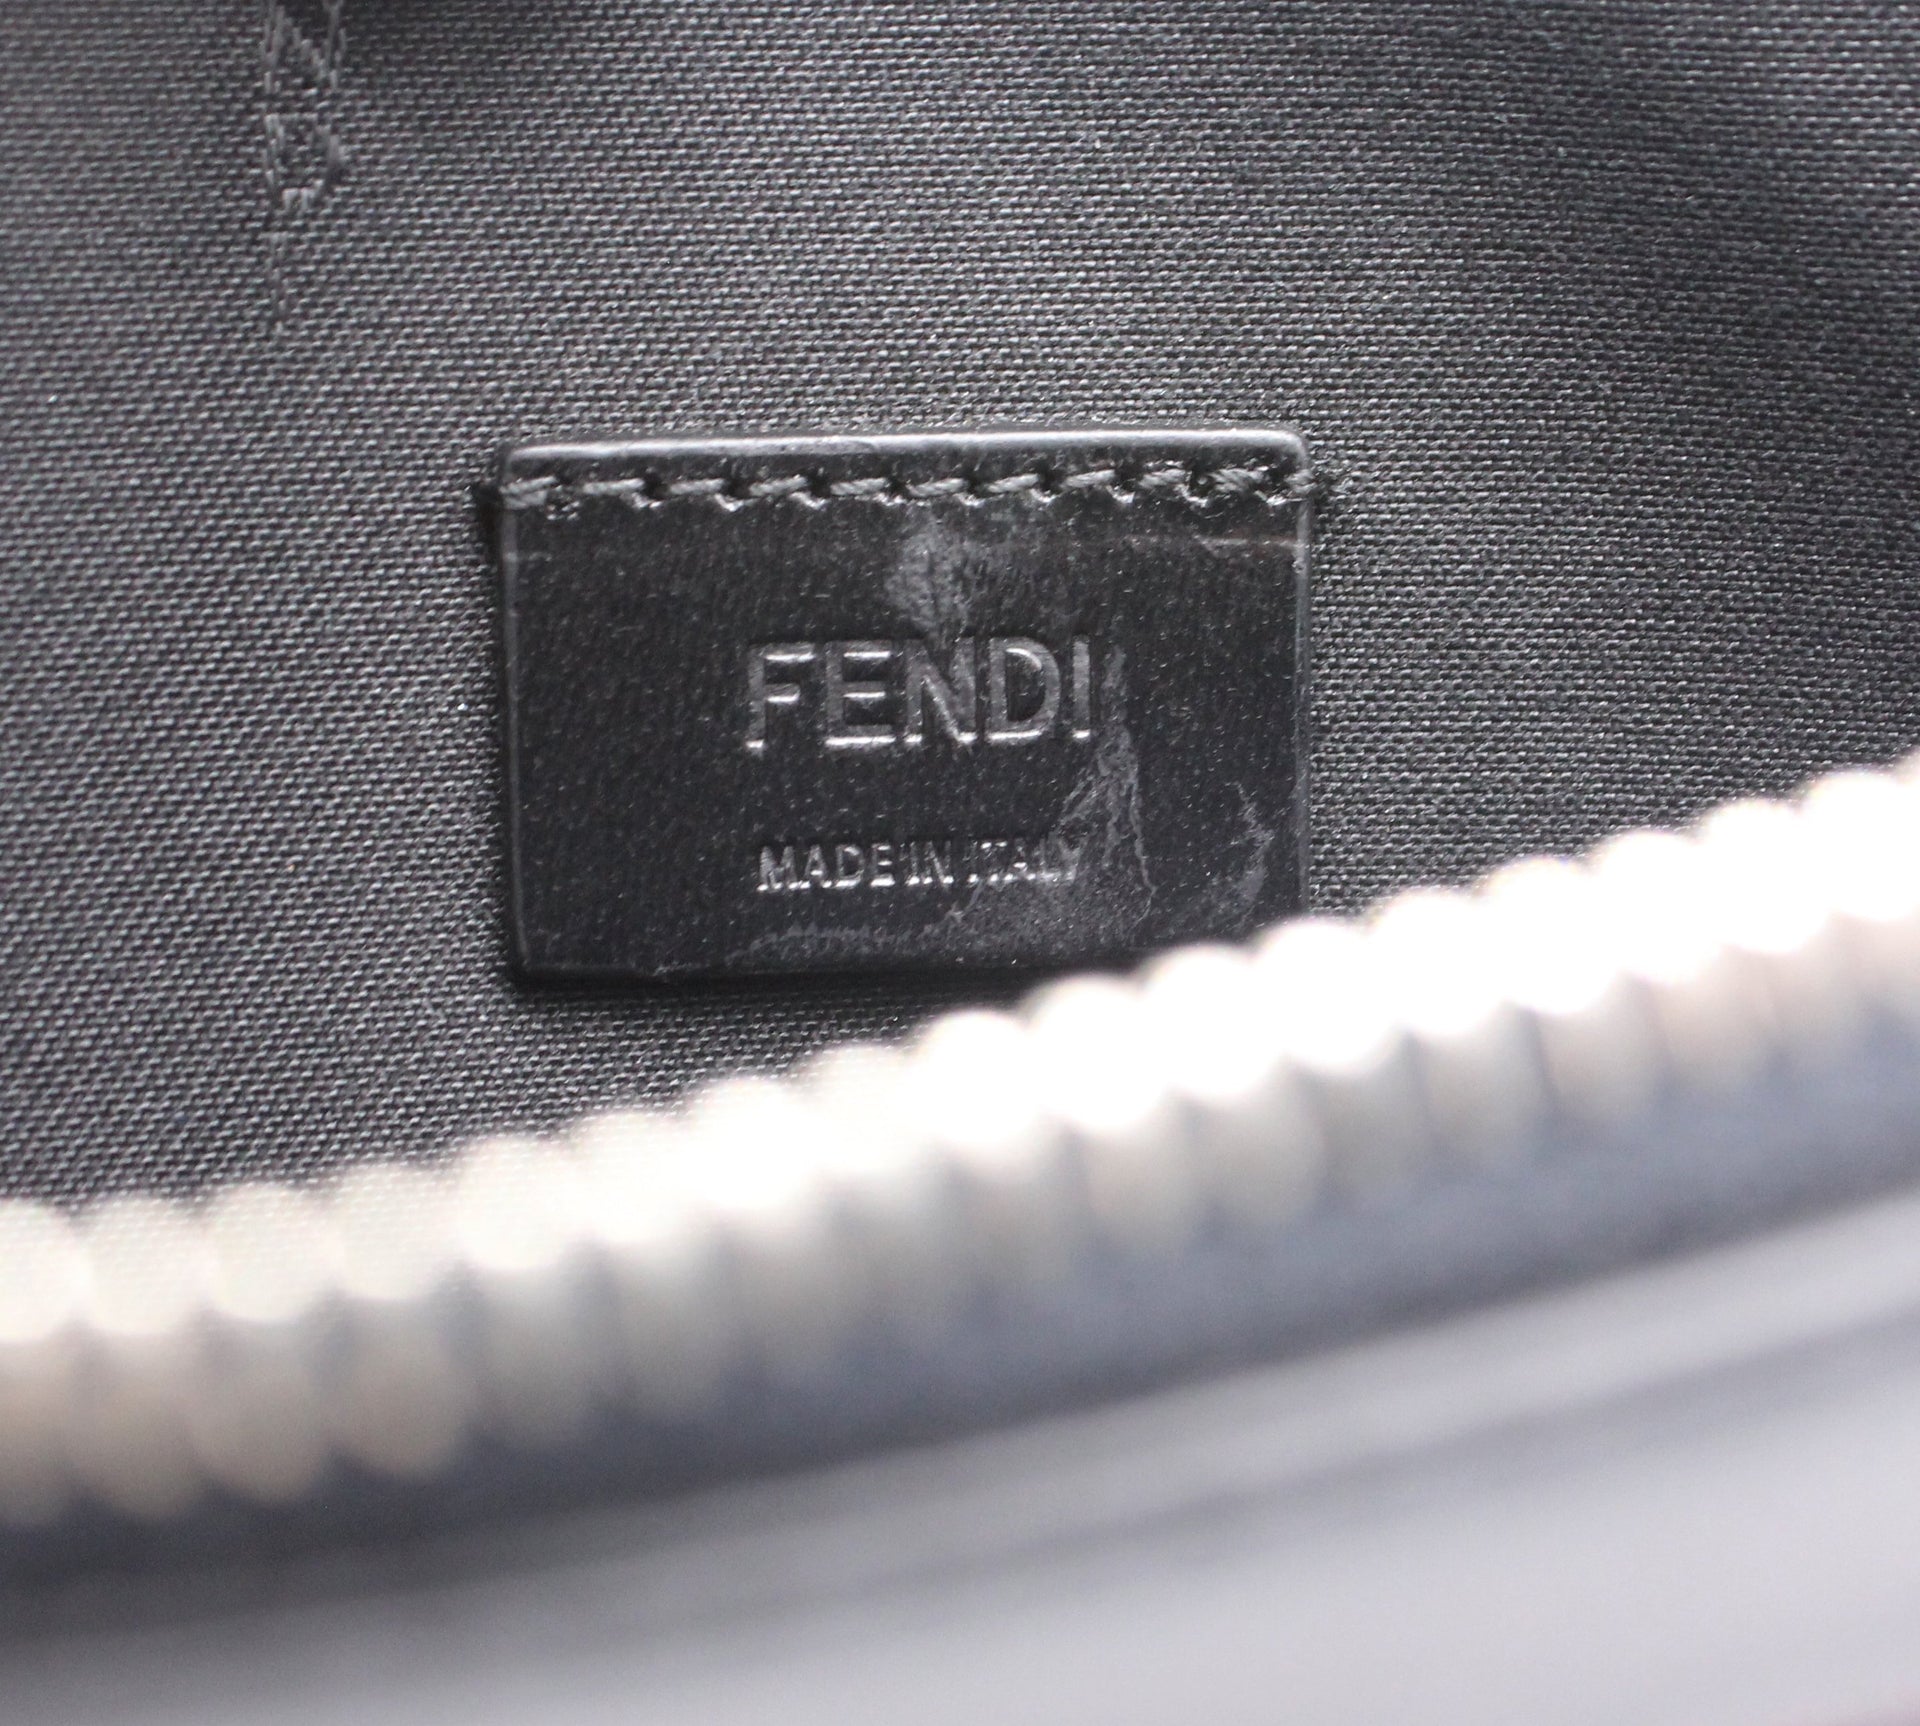 Fendi Leather Zip Clutch